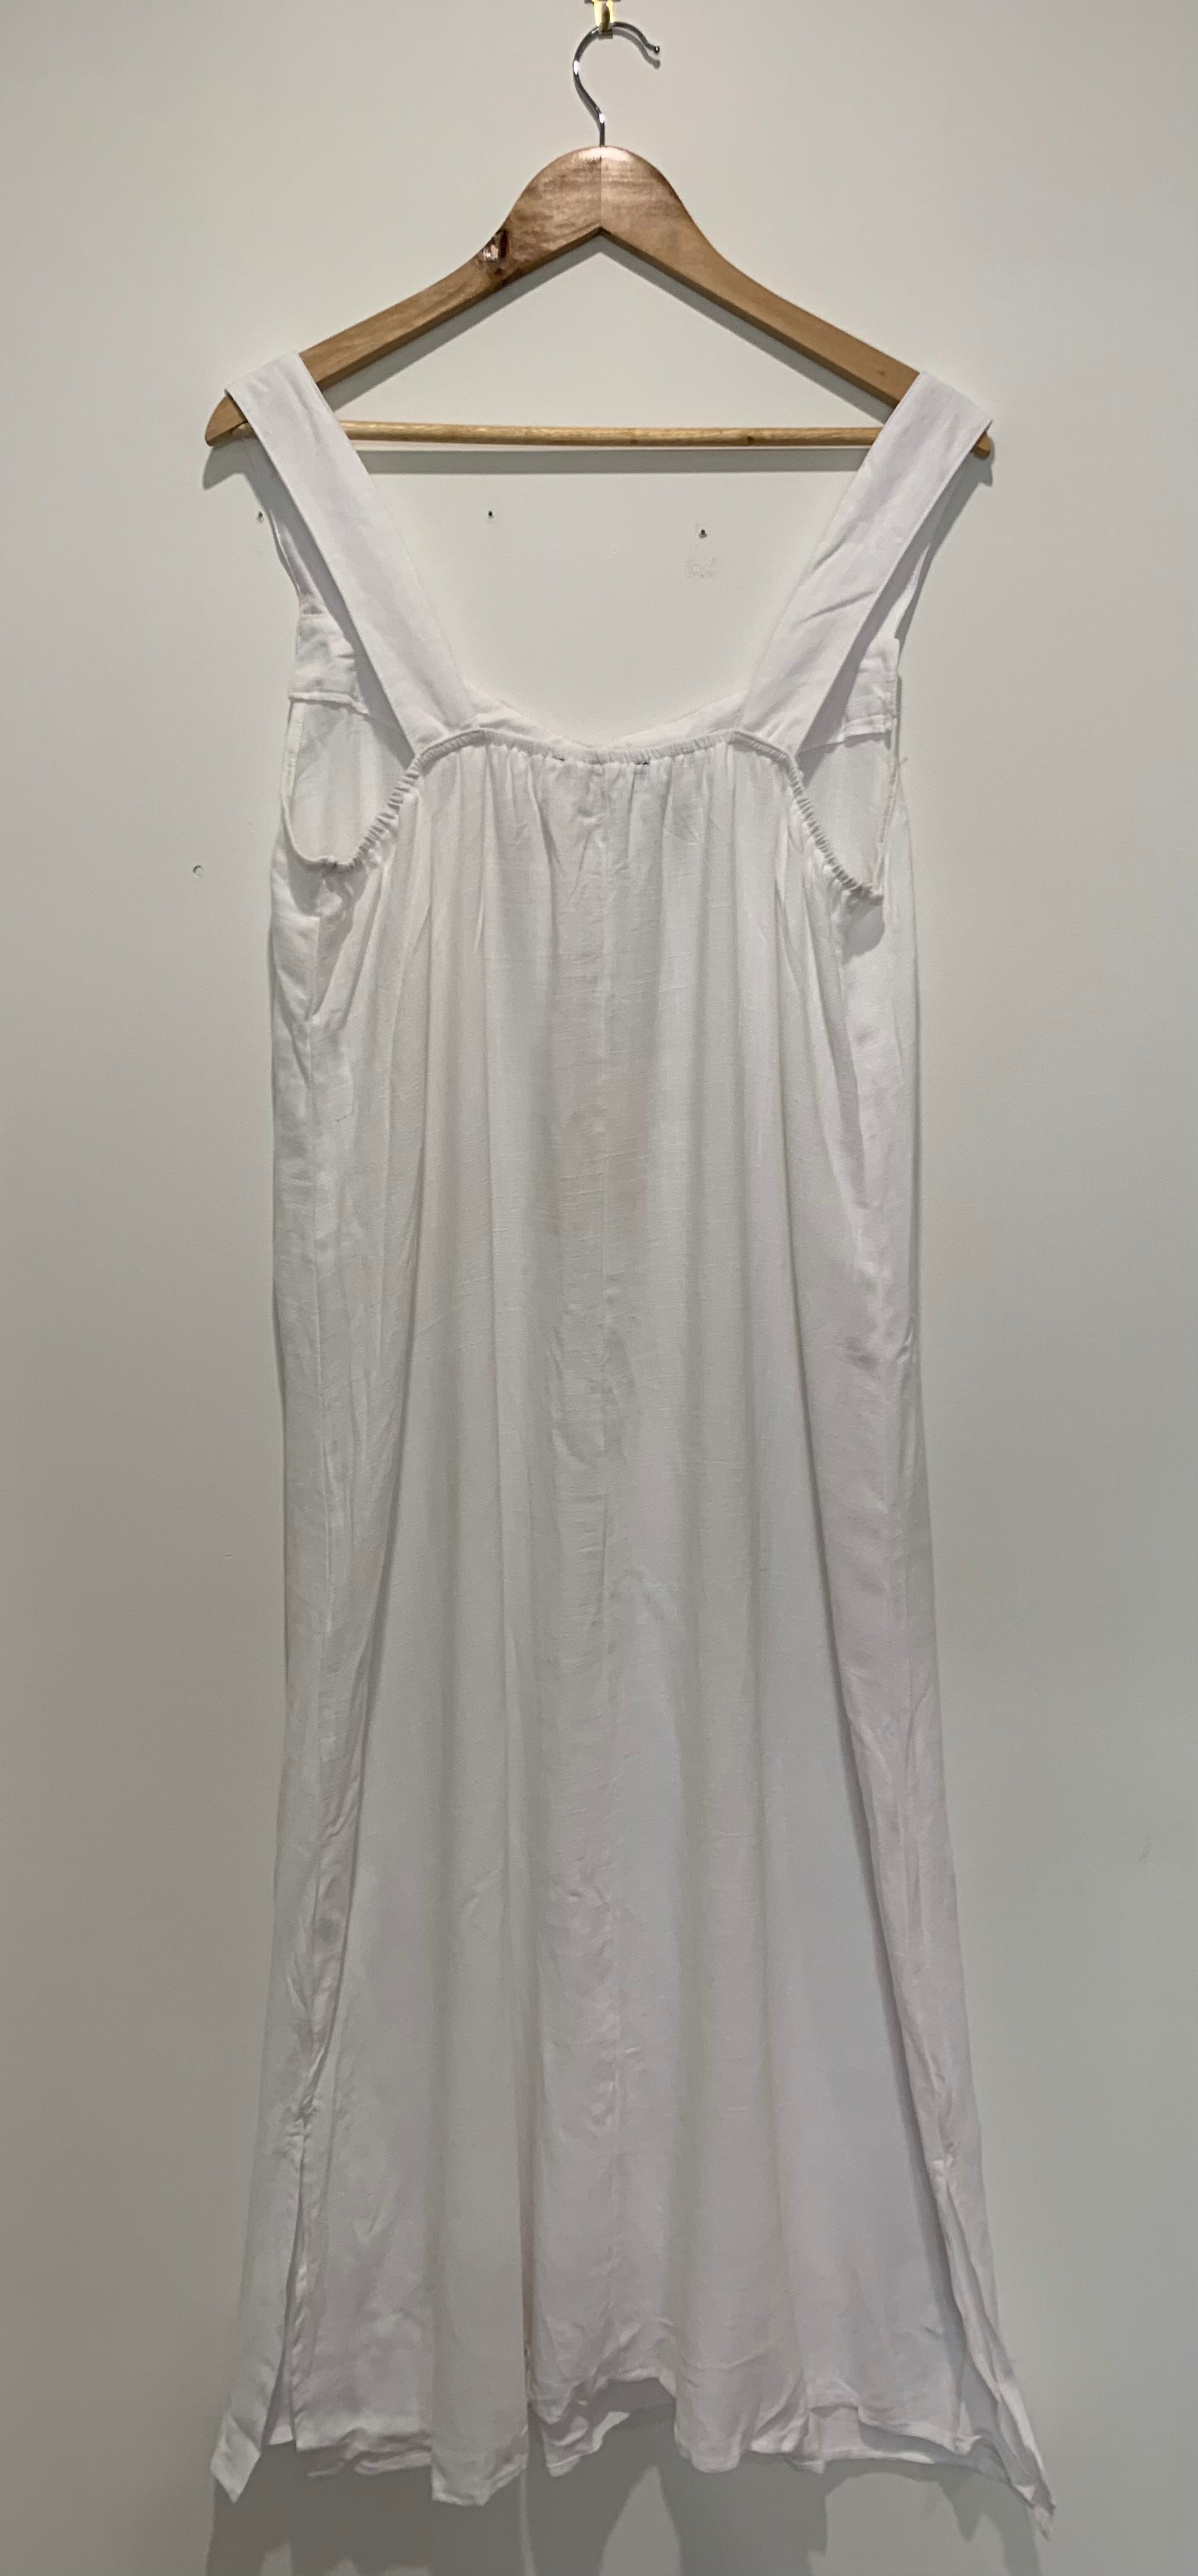 Singlet Style Maxi Dress in Crips White Linen Blend Resort/Beach Wear - Willow Tree